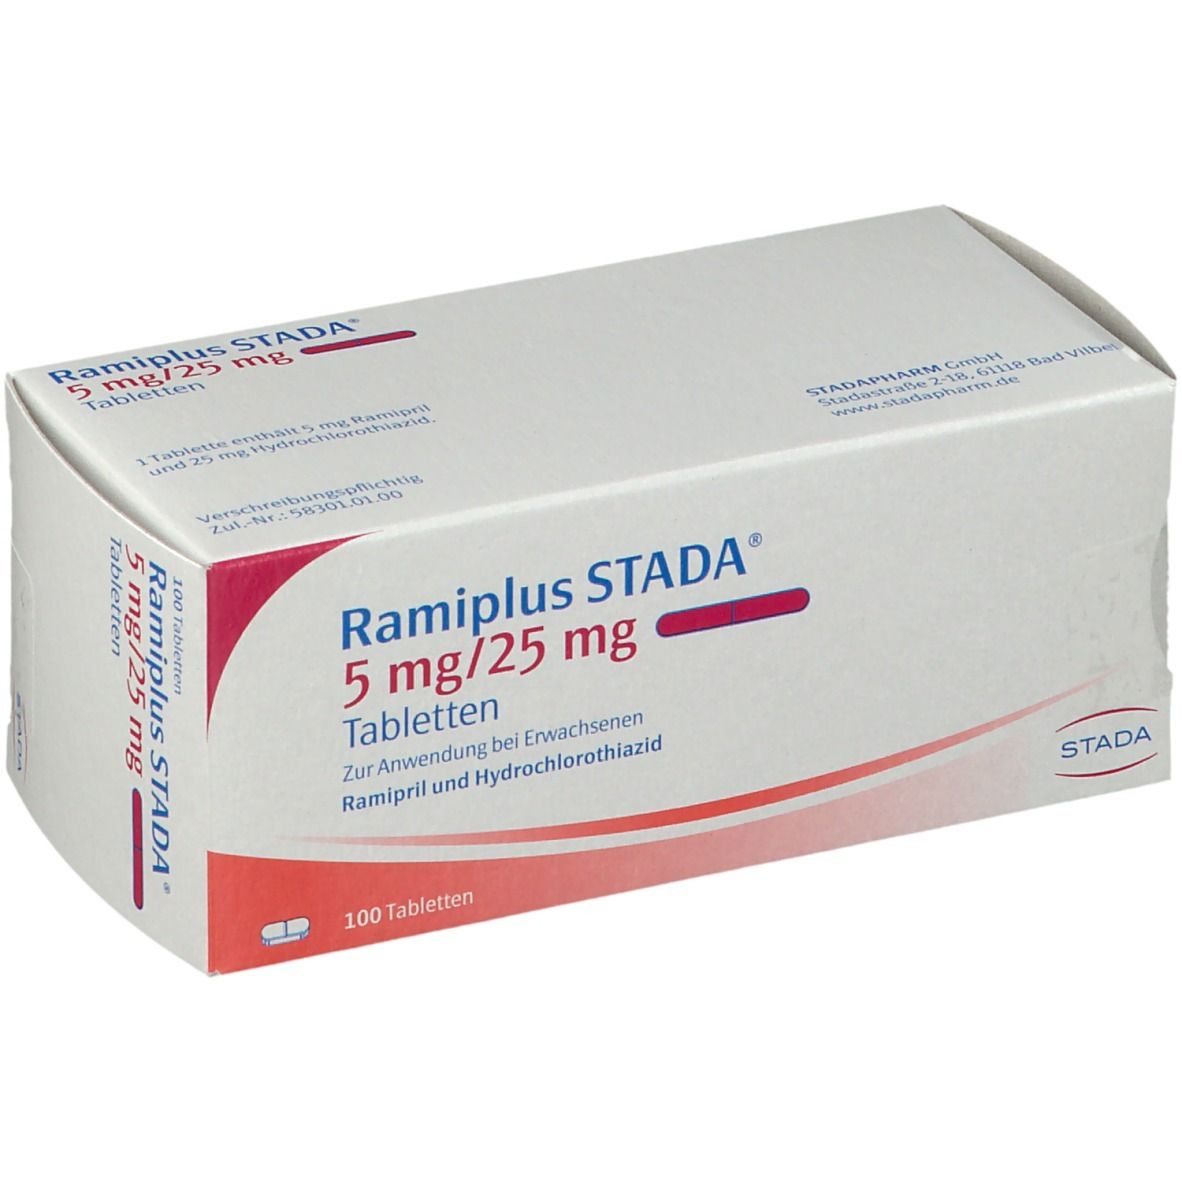 Ramiplus STADA® 5 mg/25 mg